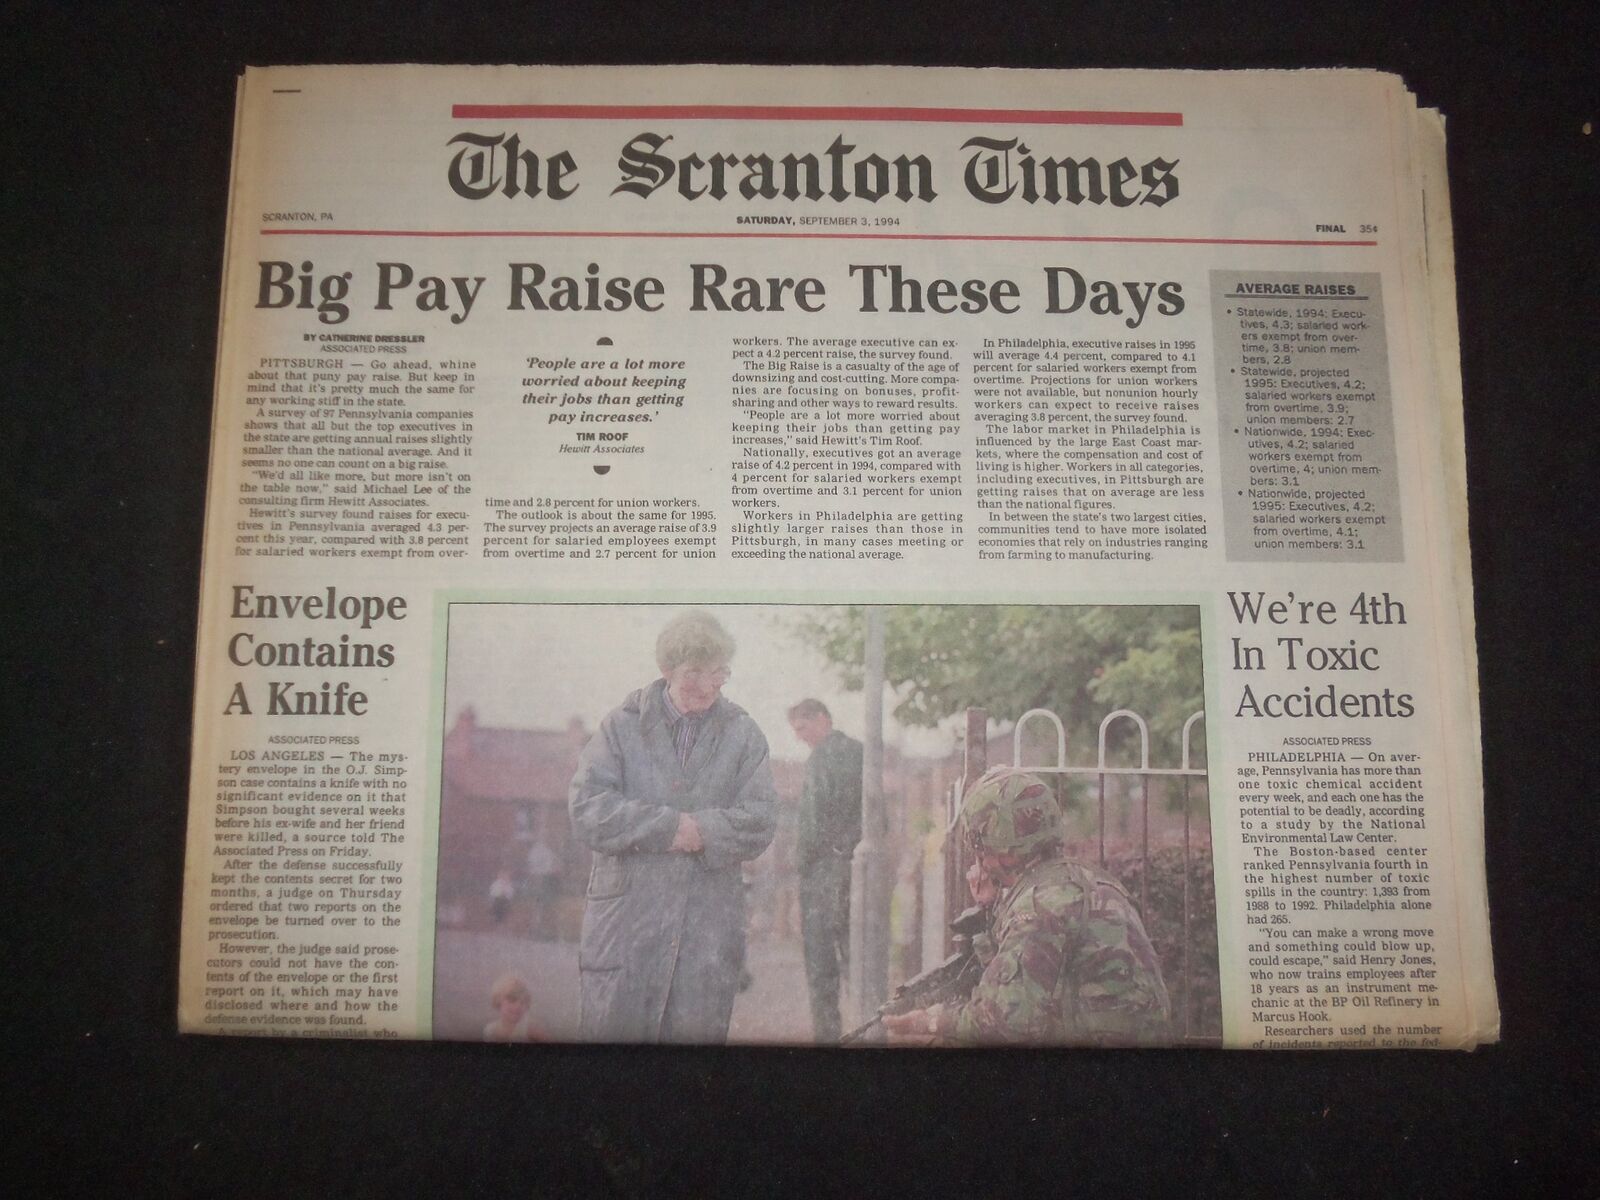 1994 SEP 3 THE SCRANTON TIMES NEWSPAPER -BIG PAY RAISES RARE THESE DAYS- NP 8343